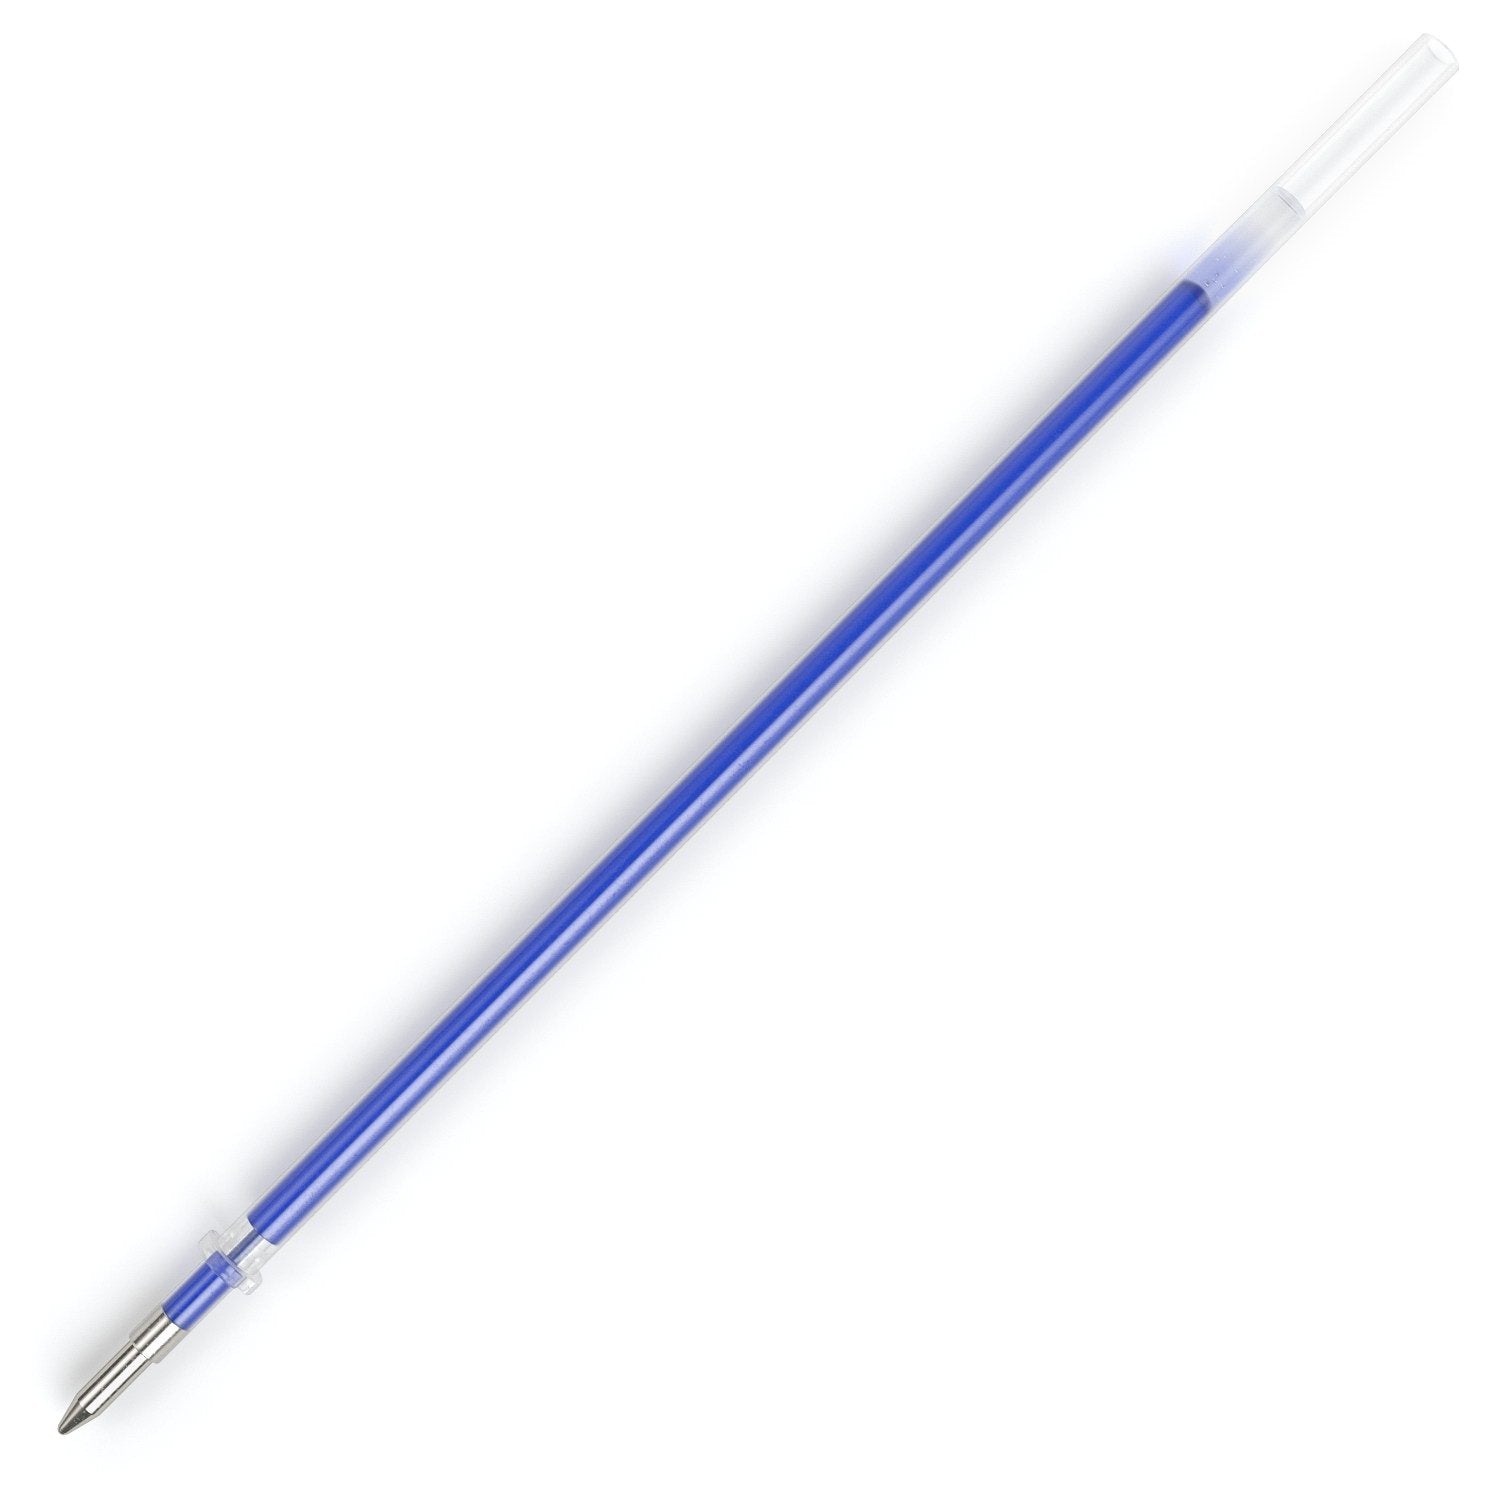  ARTEZA Colored Gel Pens Set Of 60, Fine Point